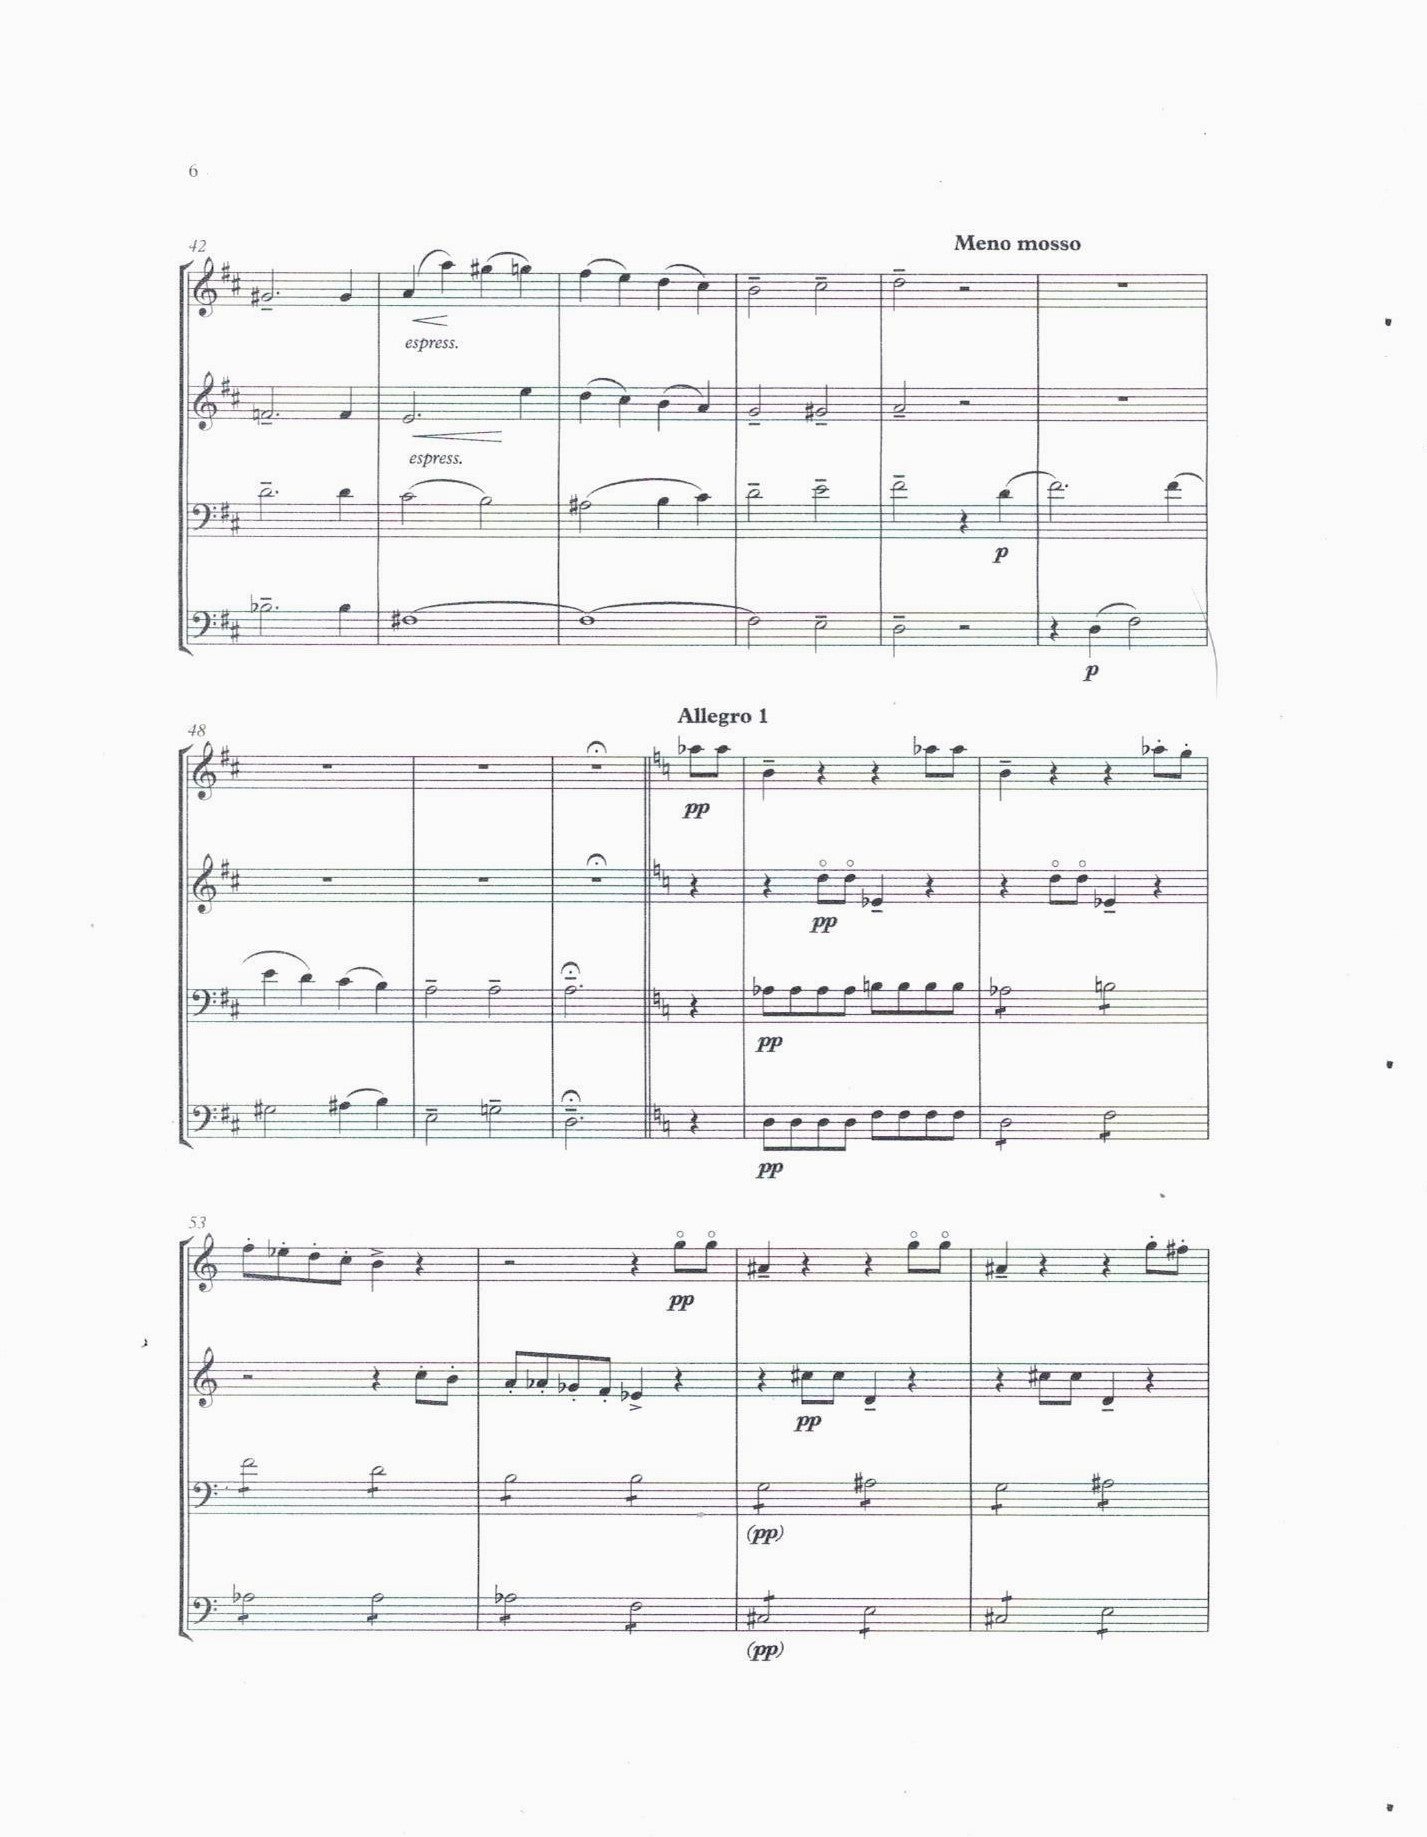 Prokofiev: Scherzo Humoristique Op. 12, No. 9 for double bass quartet